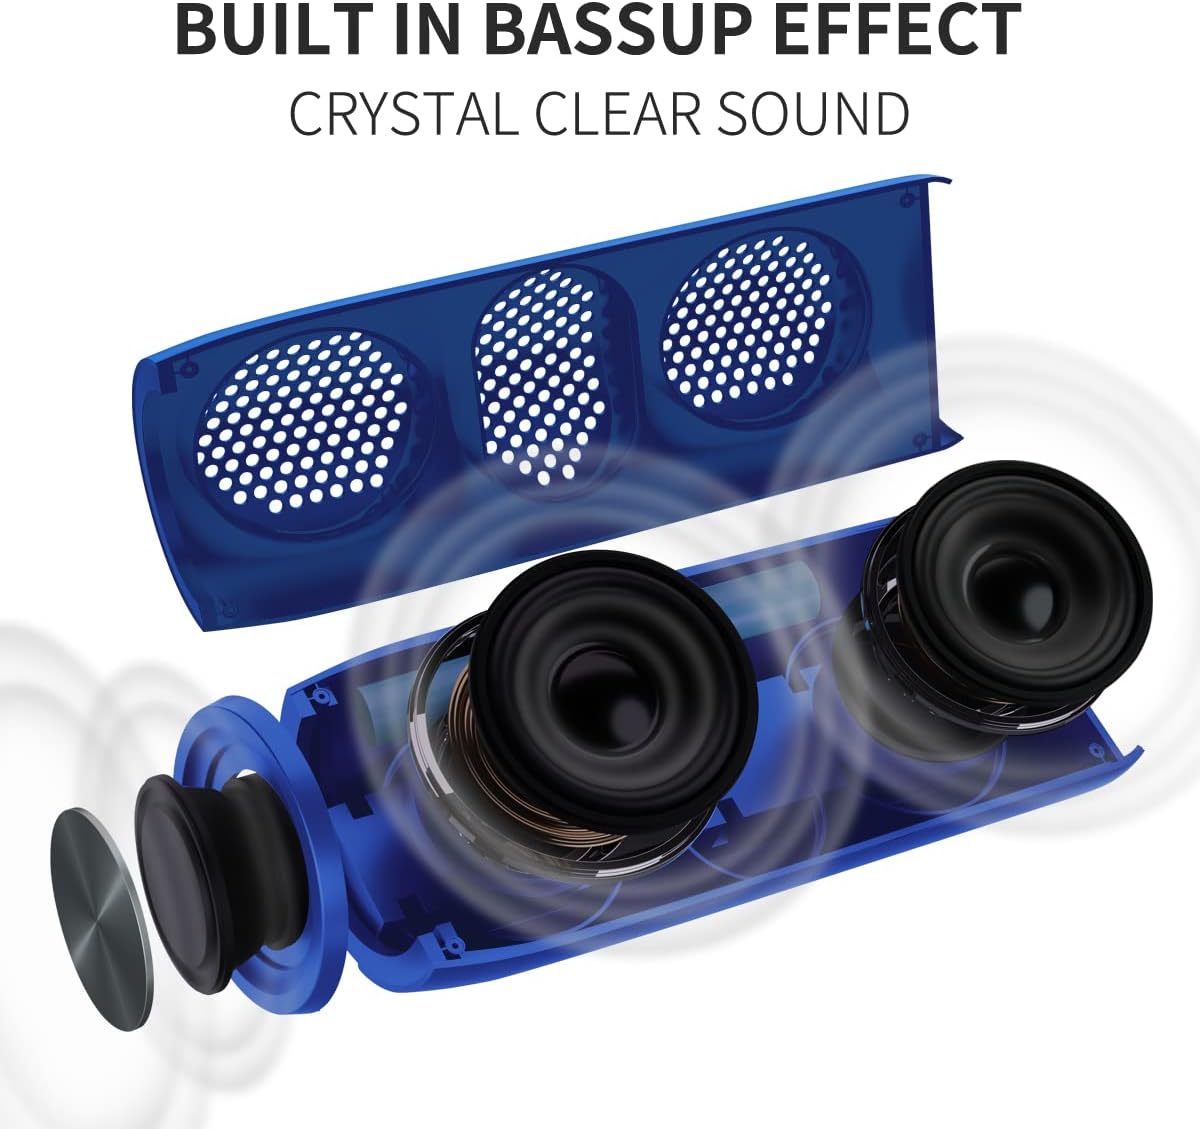 Bluetooth Version 5.0 Portable Booming Bass, 30H Playtime Waterproof Speaker